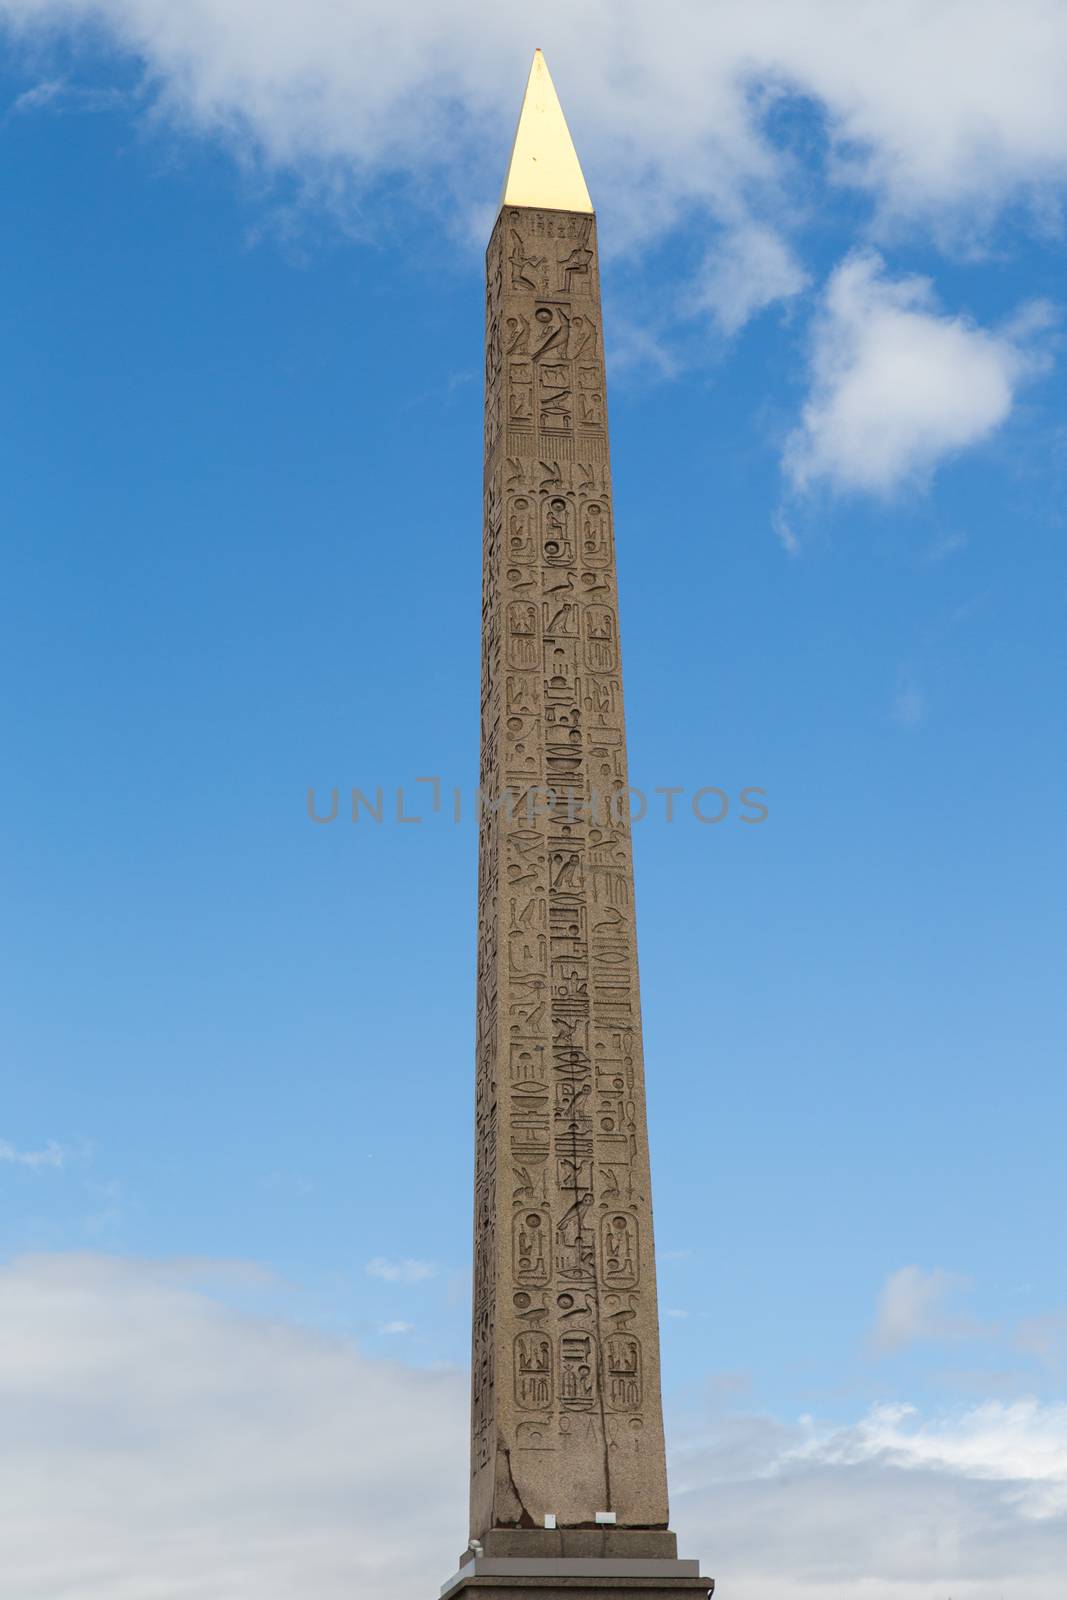 The obelisk at the place de la concorde in Paris